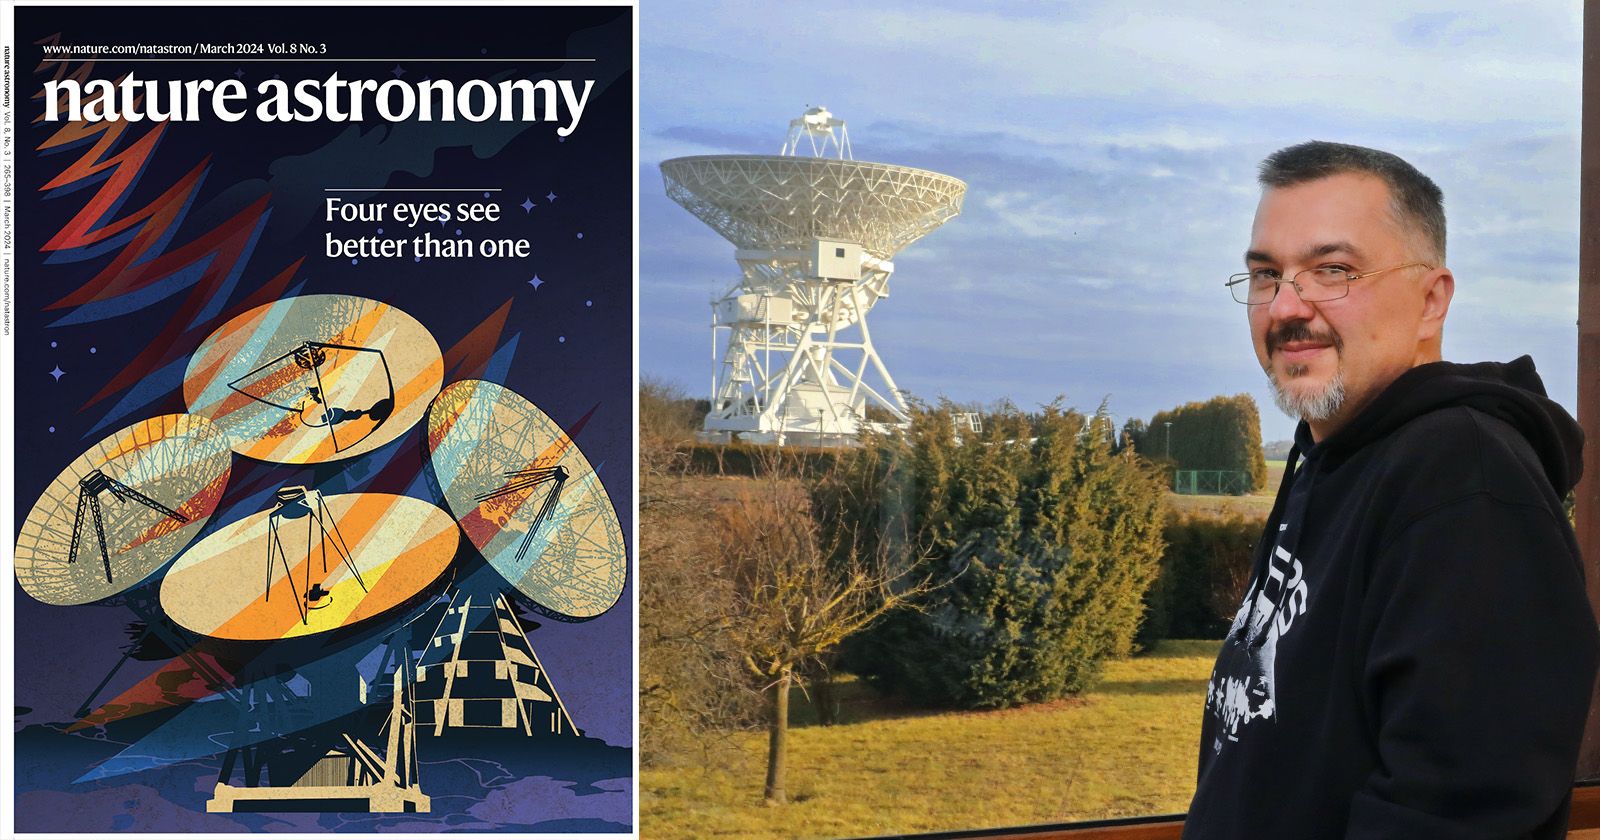 Radiotelescope on the cover